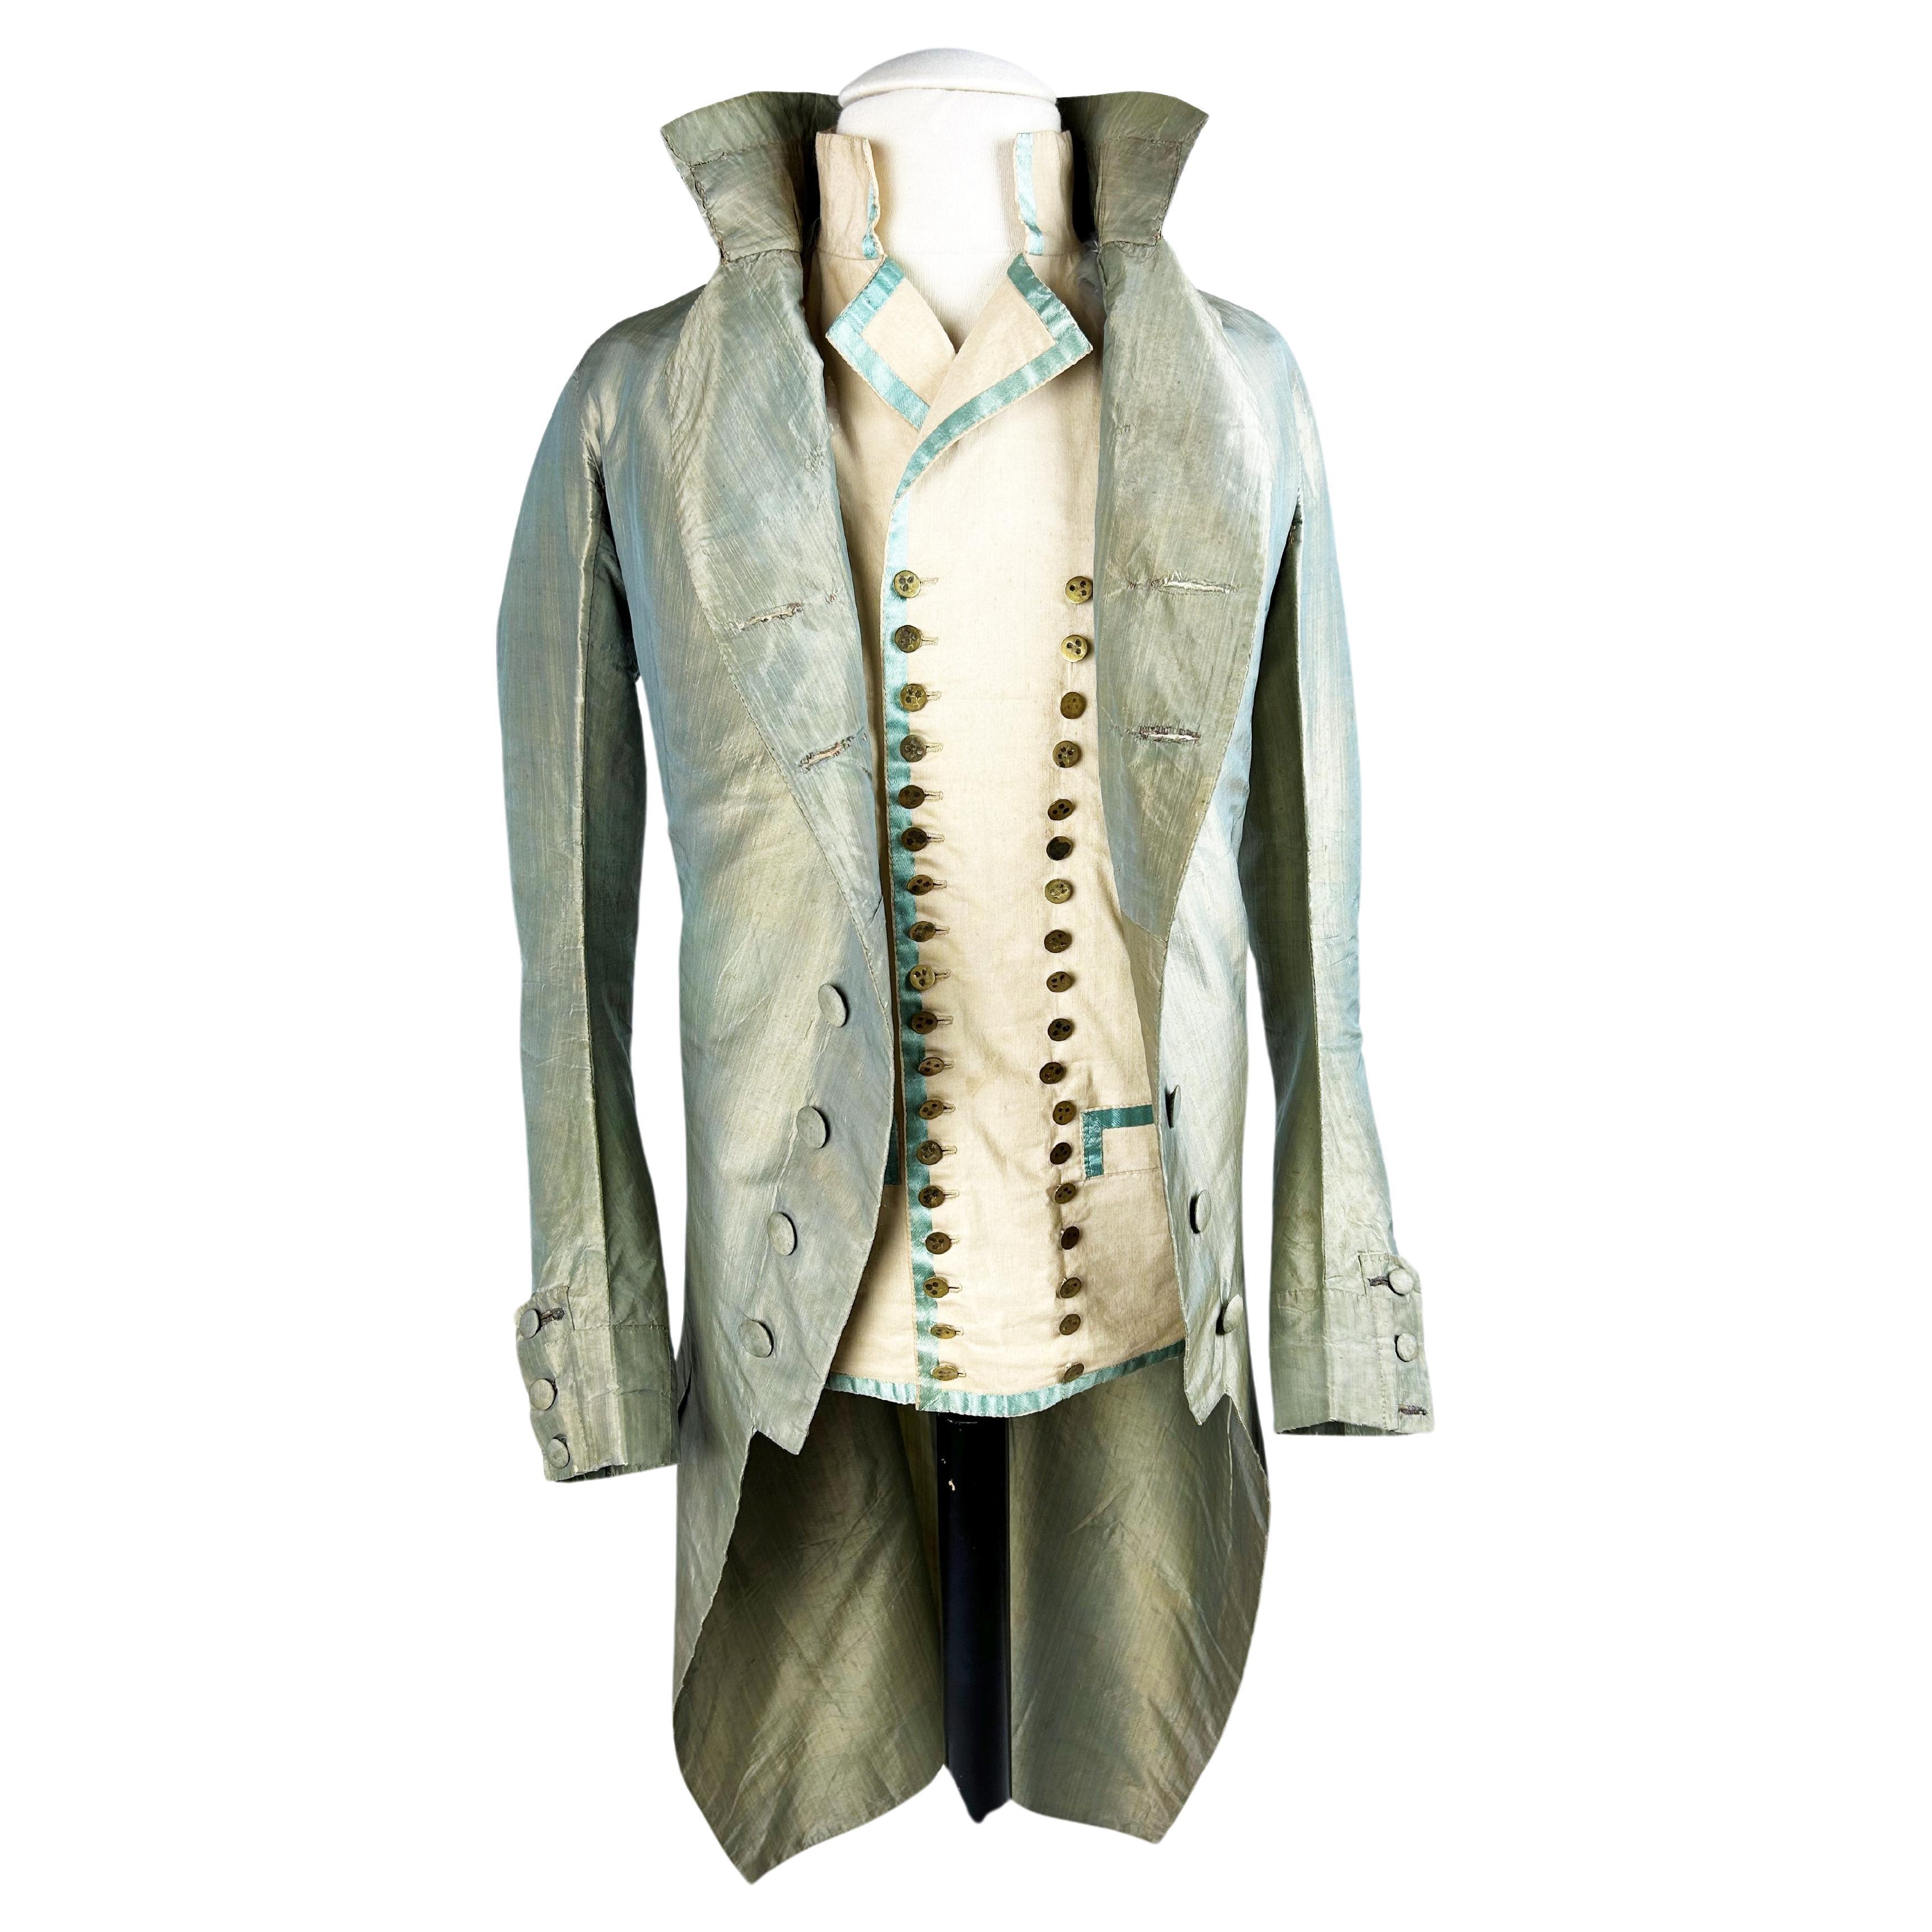 A changing taffeta summer habit and cotton waistcoat - England Circa 1785